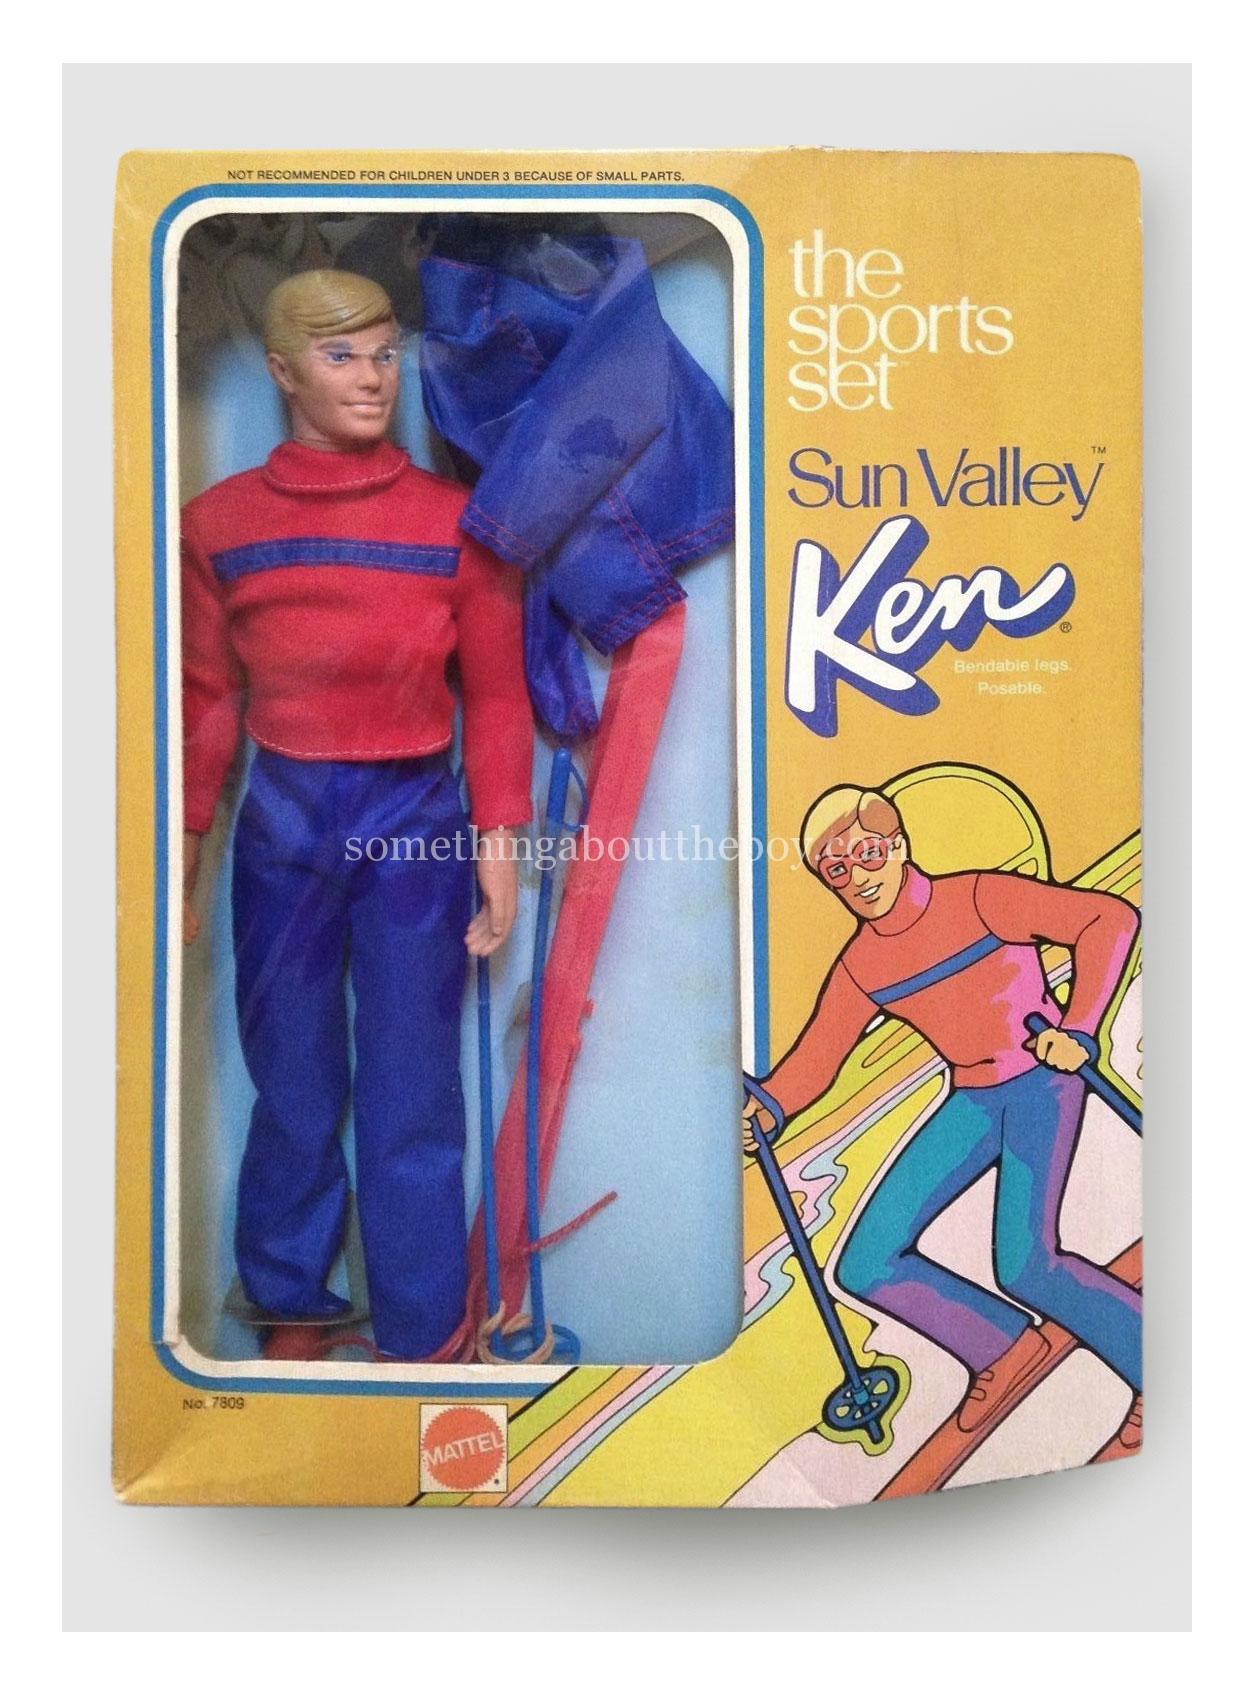 1974 #7809 The Sports Set Sun Valley Ken